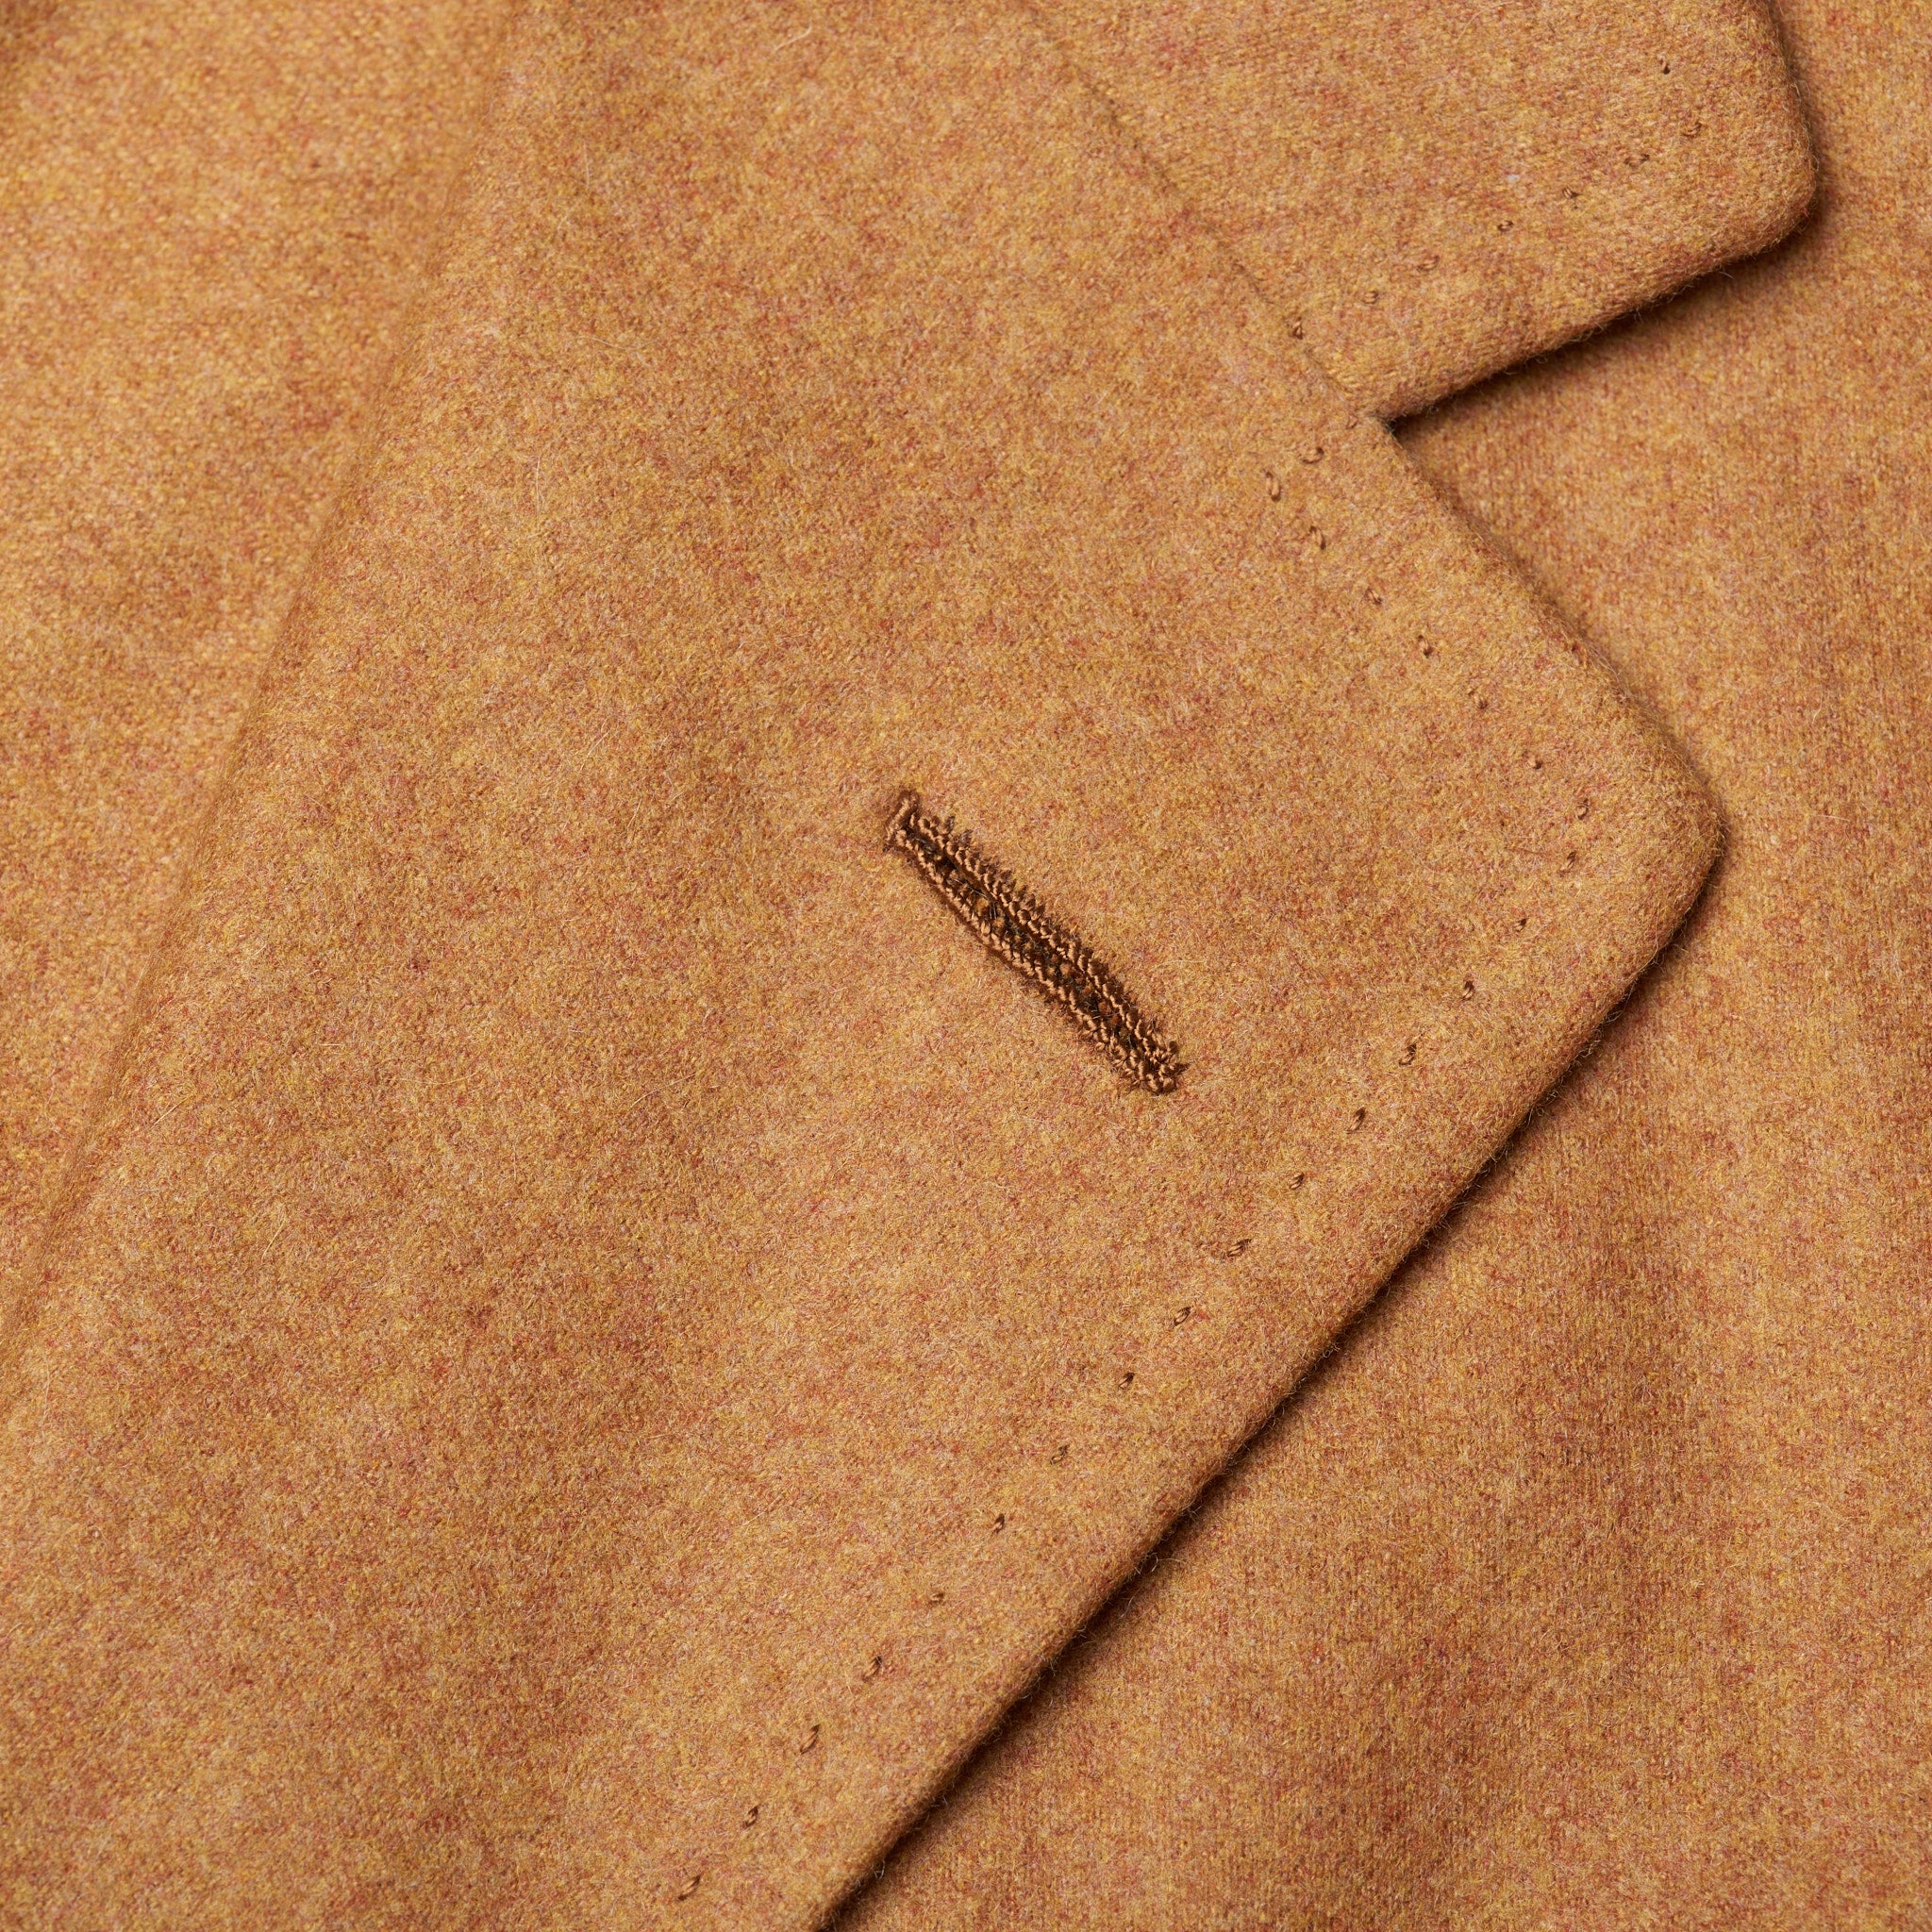 D'AVENZA Handmade Tan Cashmere Unlined Suit EU 50 NEW US 40